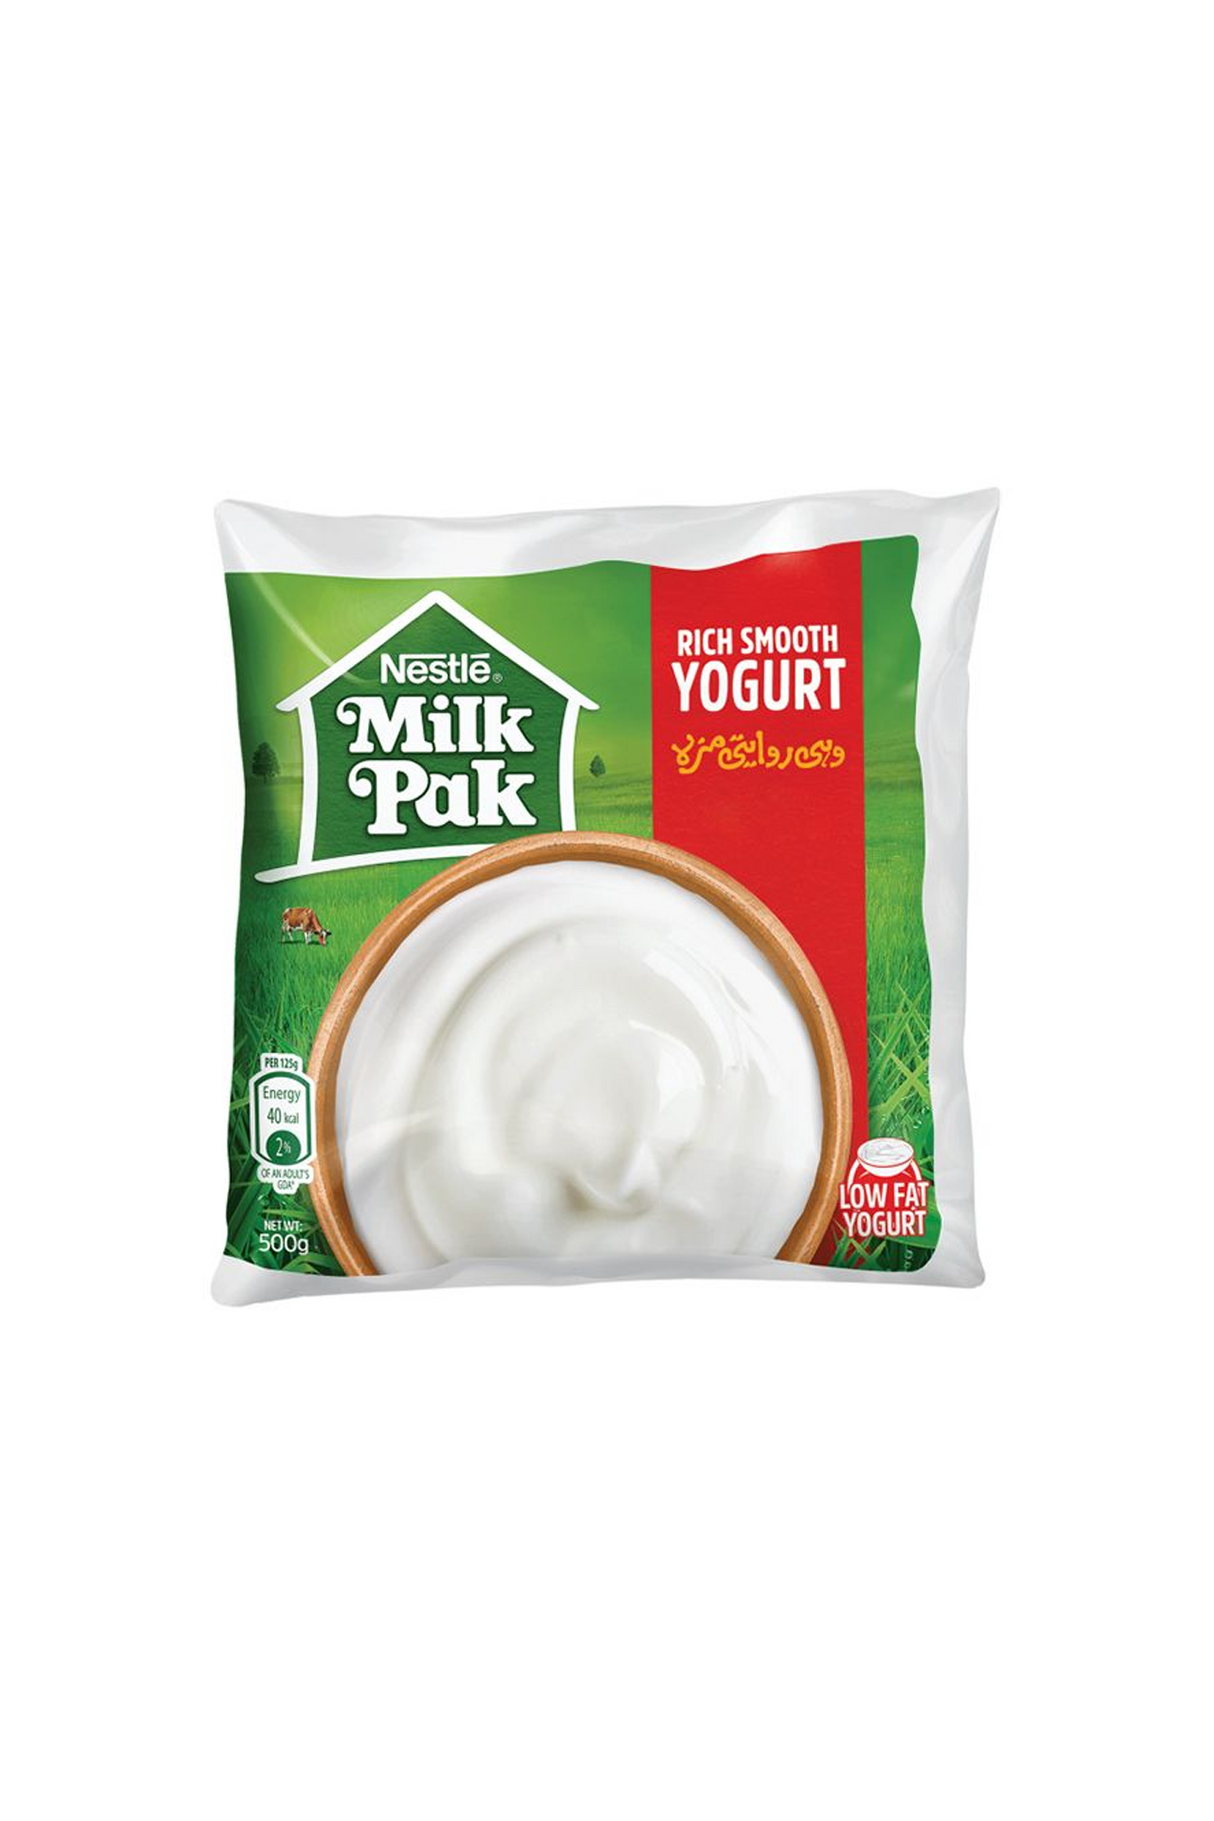 nestle milk pak yogurt 495ml